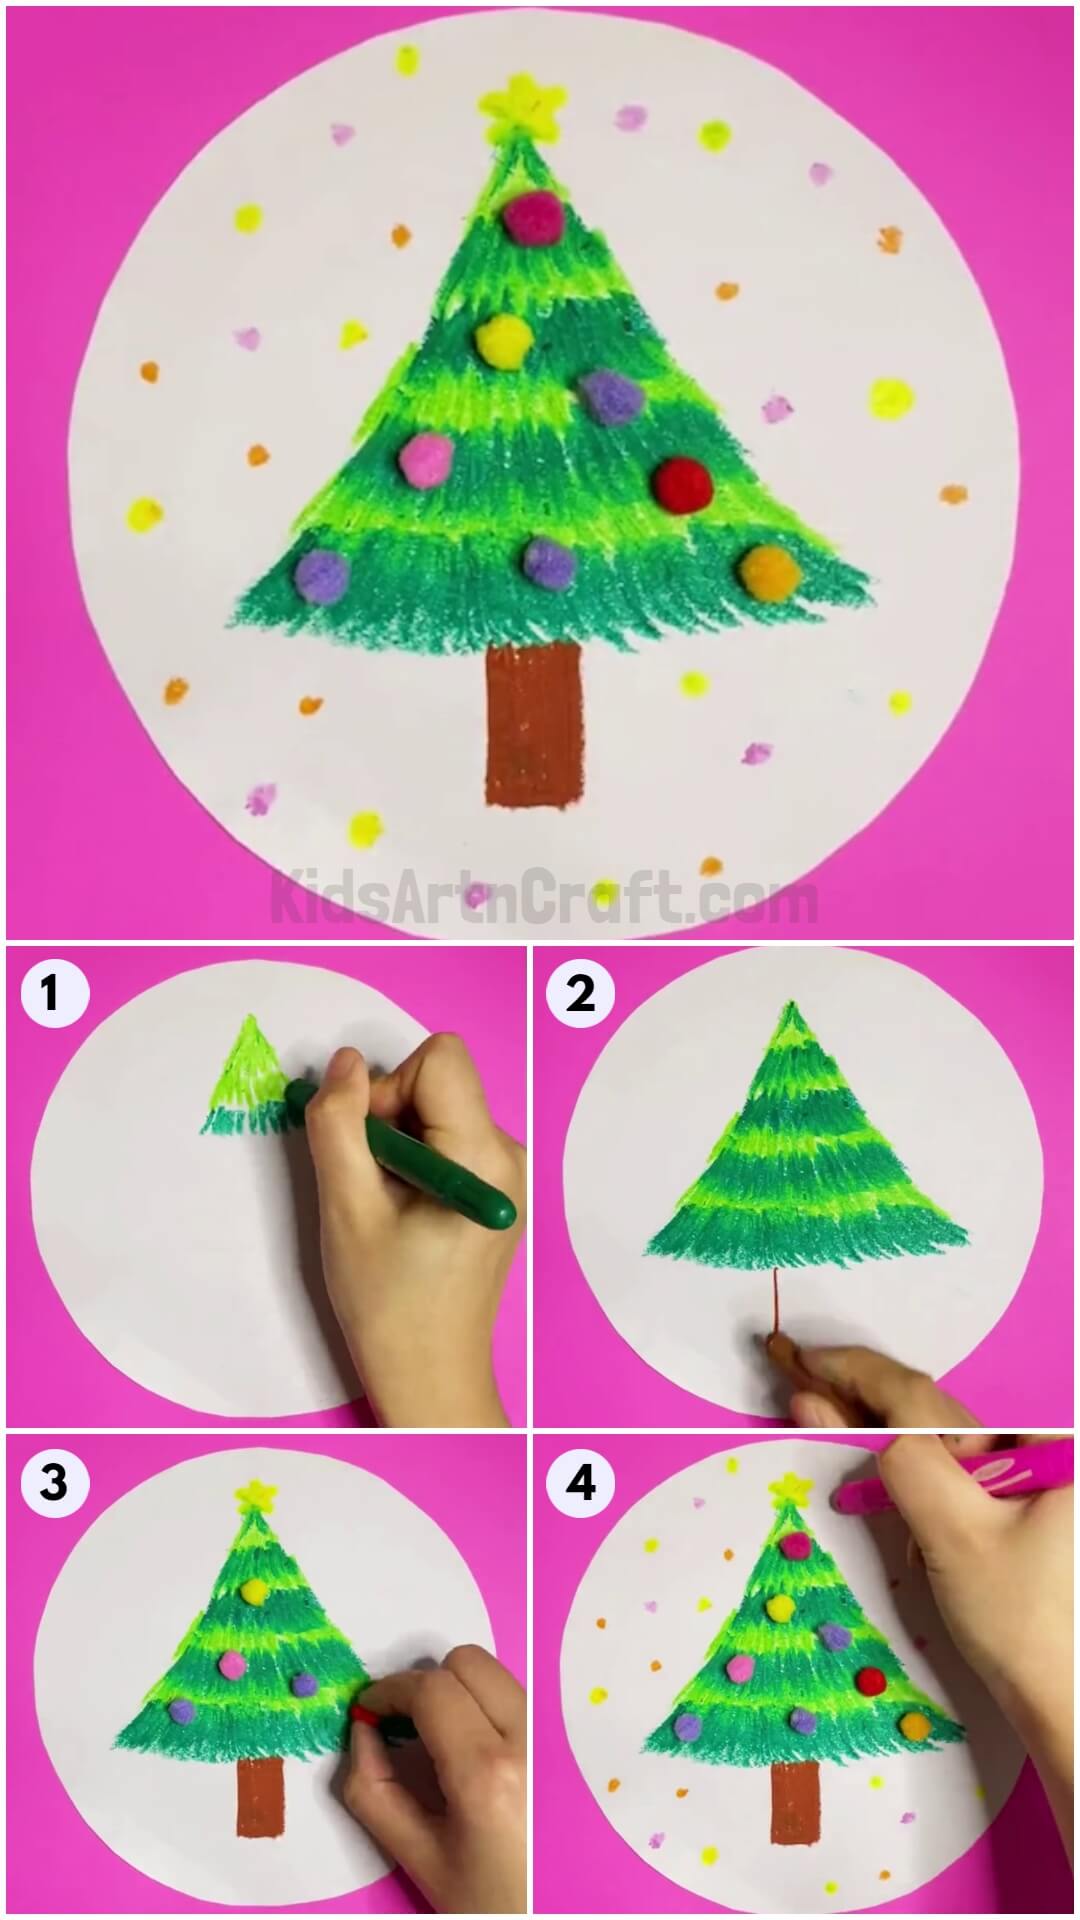 Easy-to-make Christmas Tree Craft For Beginners-An Easily Constructed Christmas Tree Craft For Newcomers